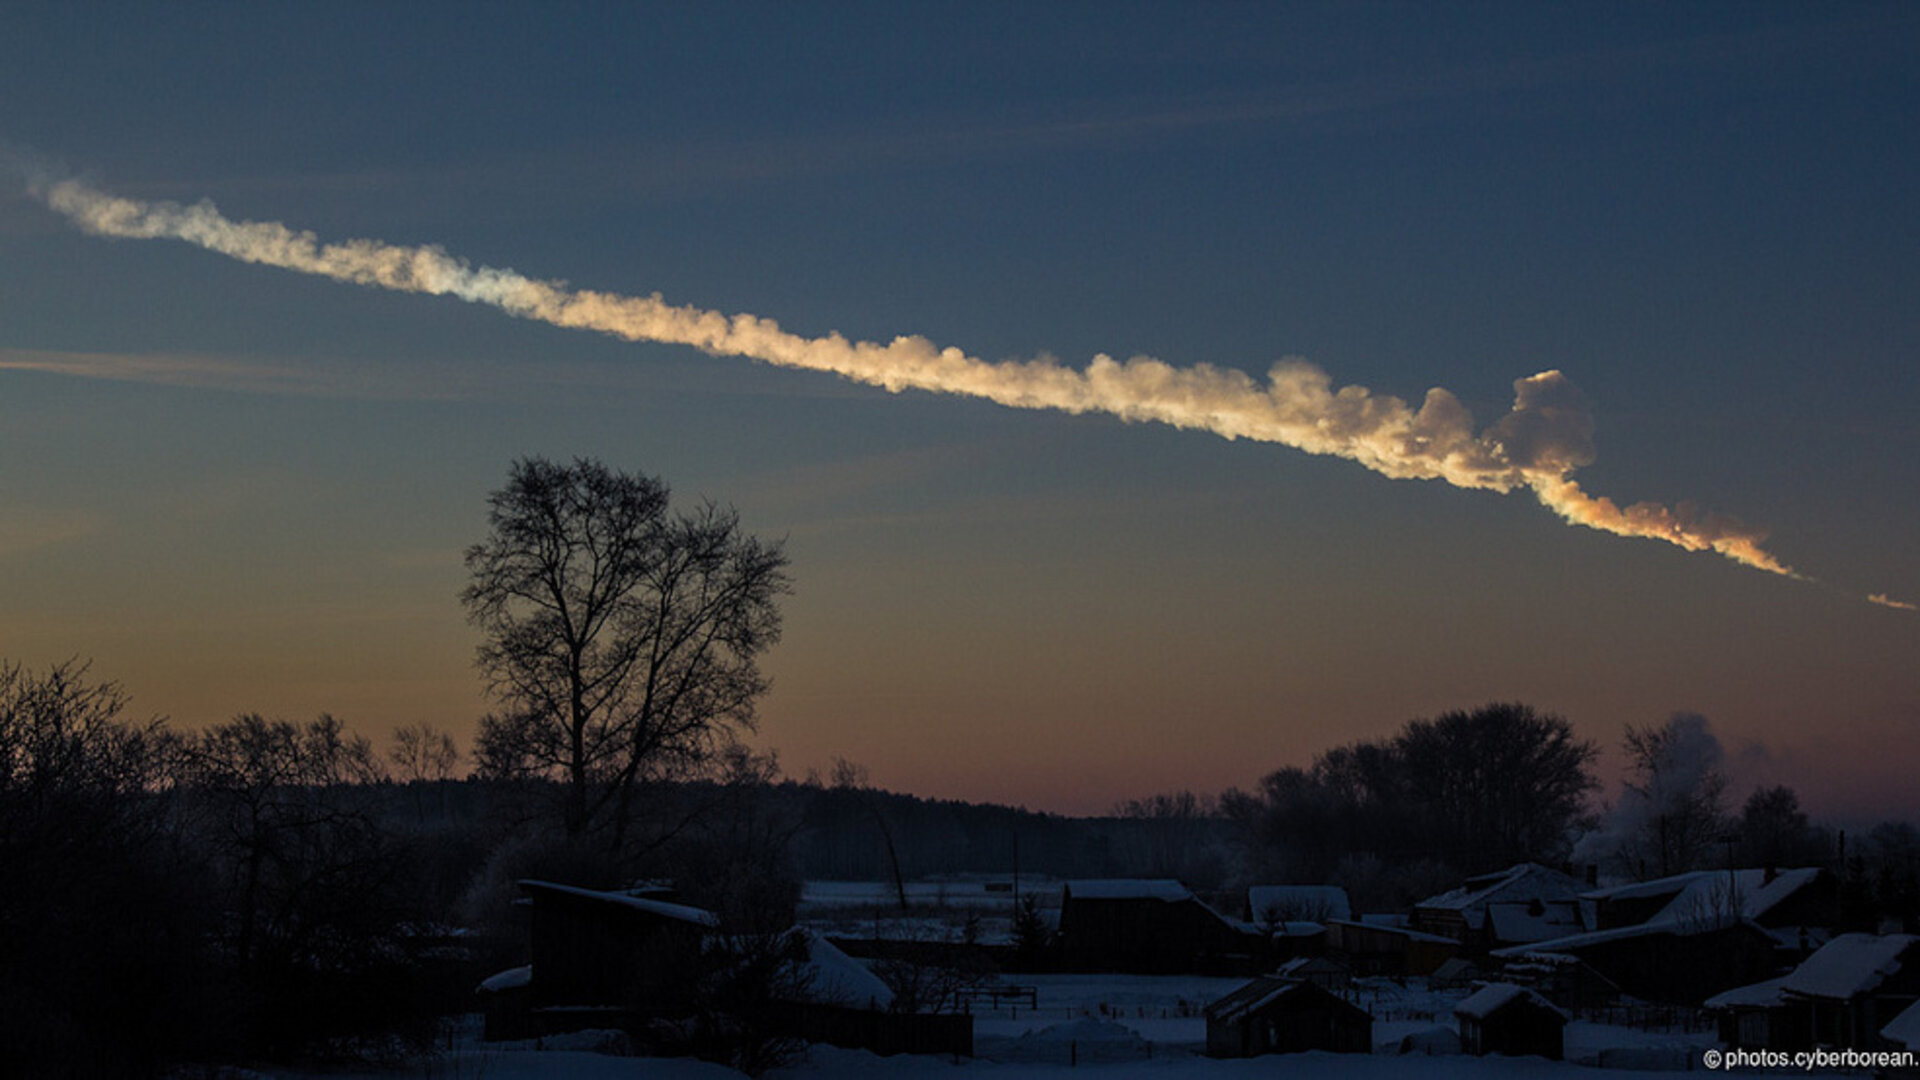 Chelyabinsk asteroid trail